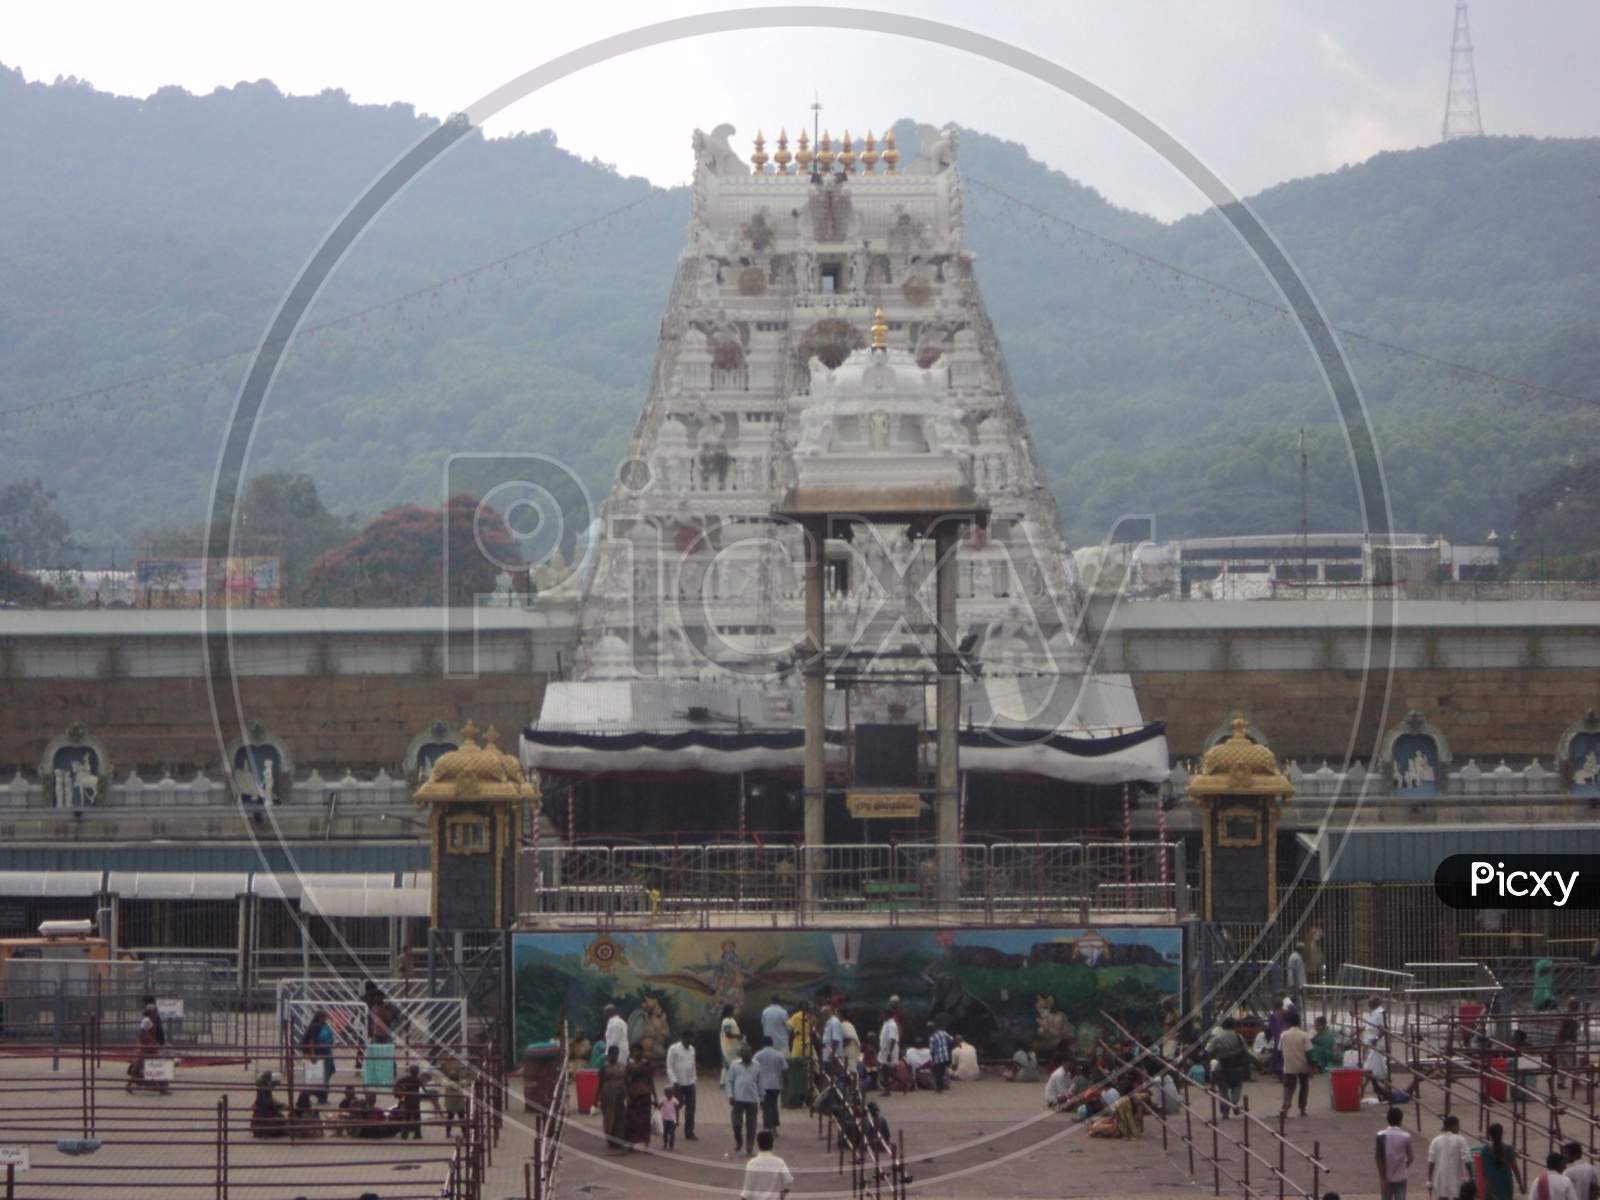 Tirupati balaji Temple at Tirumala,Its a Editorial Photo don't use it as a commercial photo.